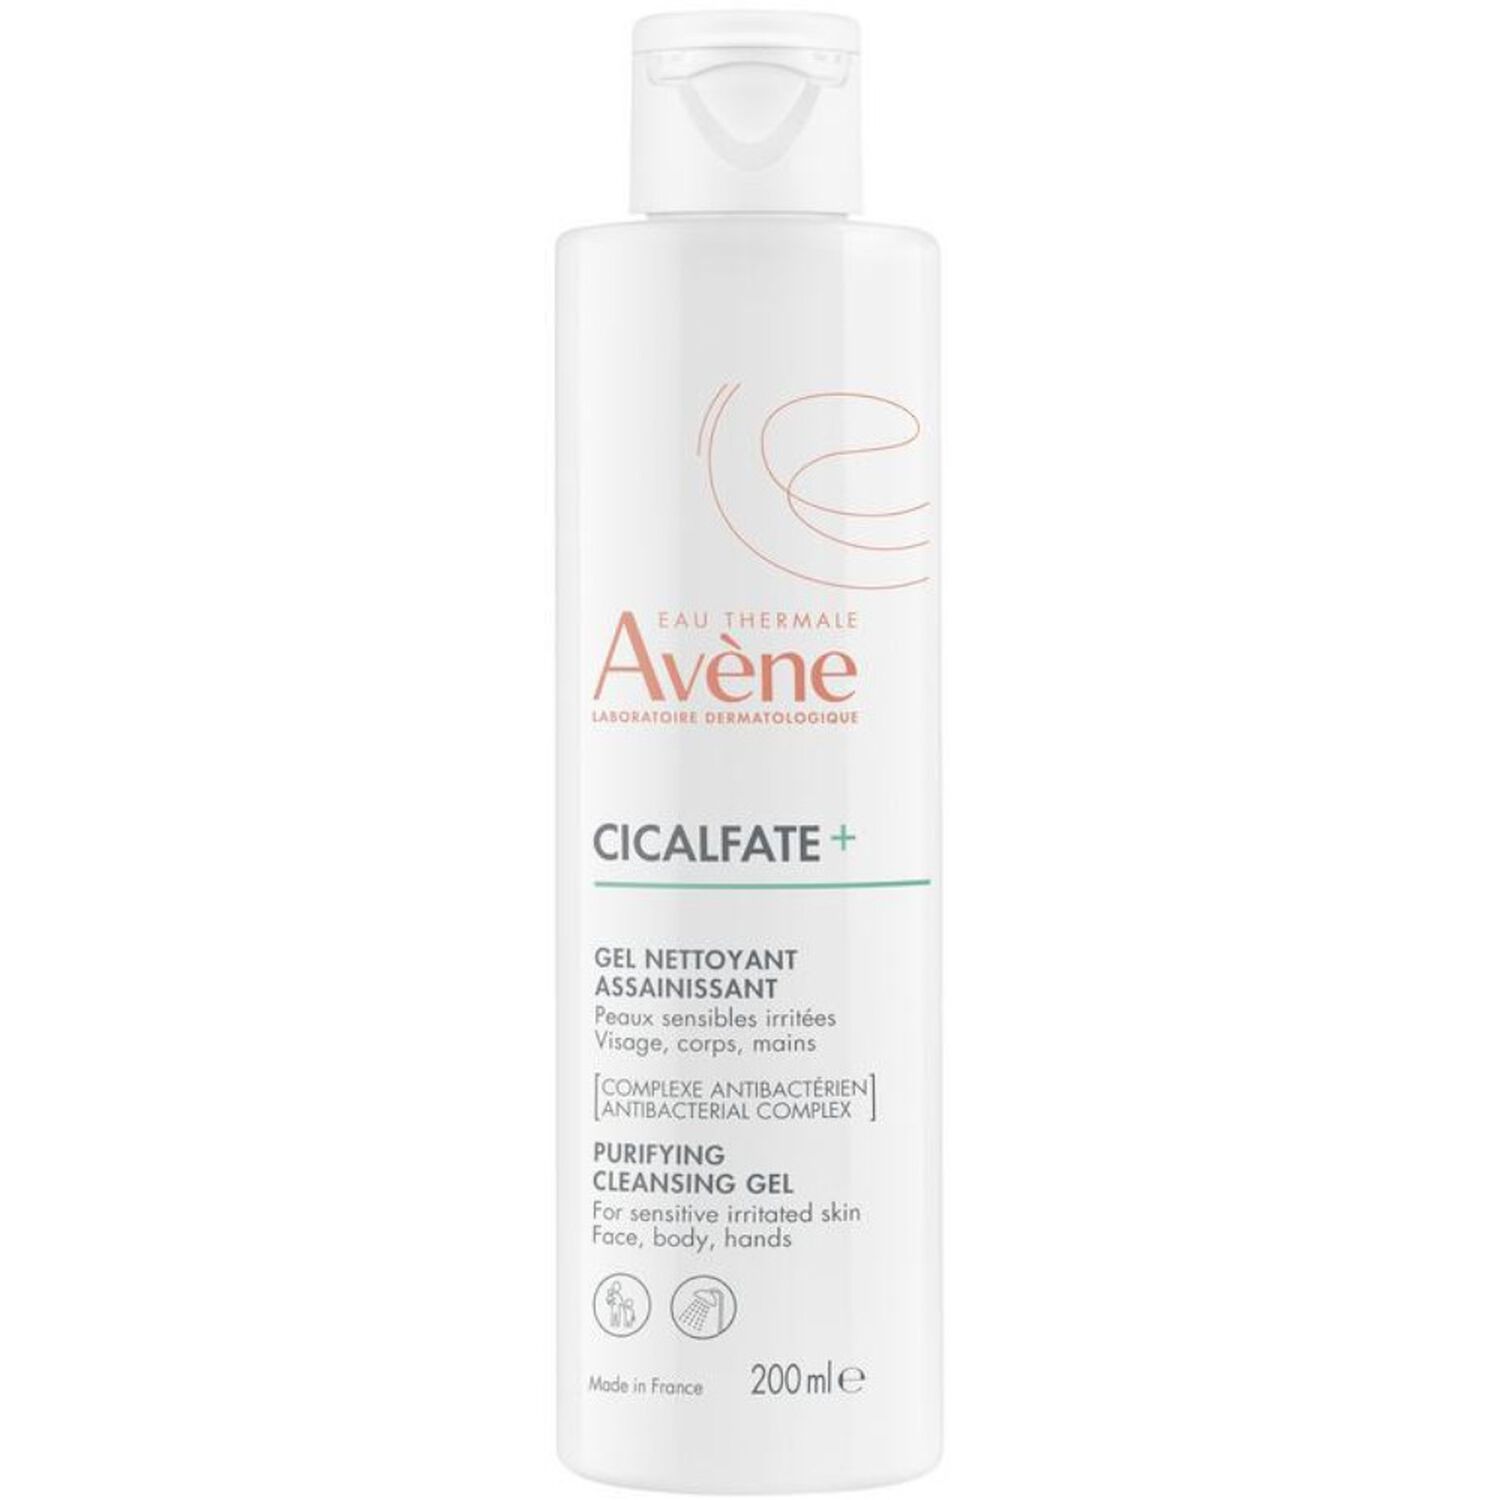 Avene Cicalfate Anti-Bacterial Repair Cream -100ml – The French